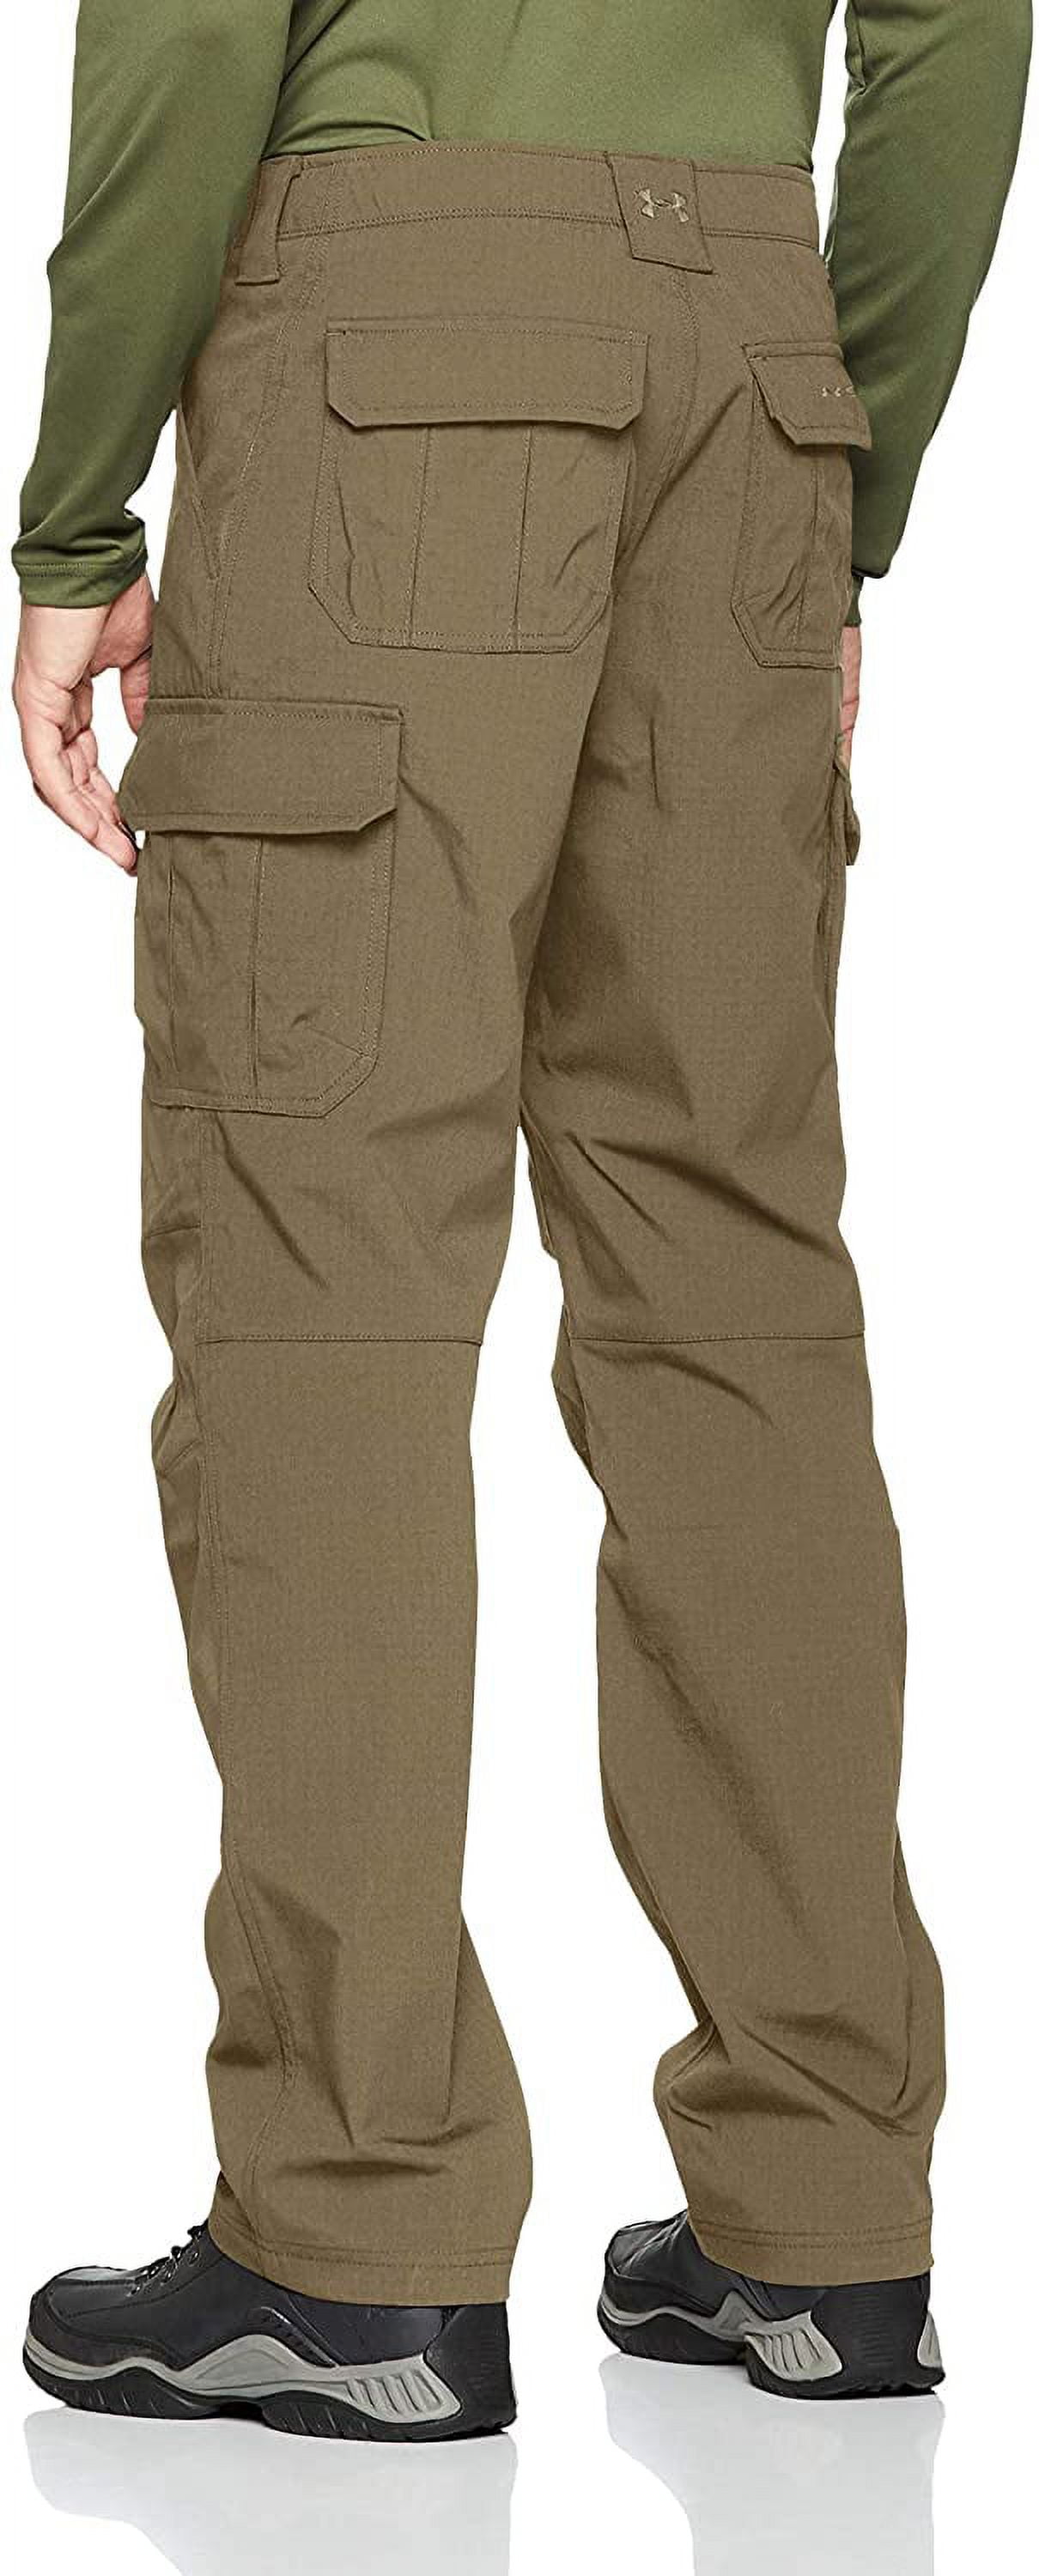 UNDER ARMOUR UA Tactical Patrol Pants - Bayou - Size 36 x 32